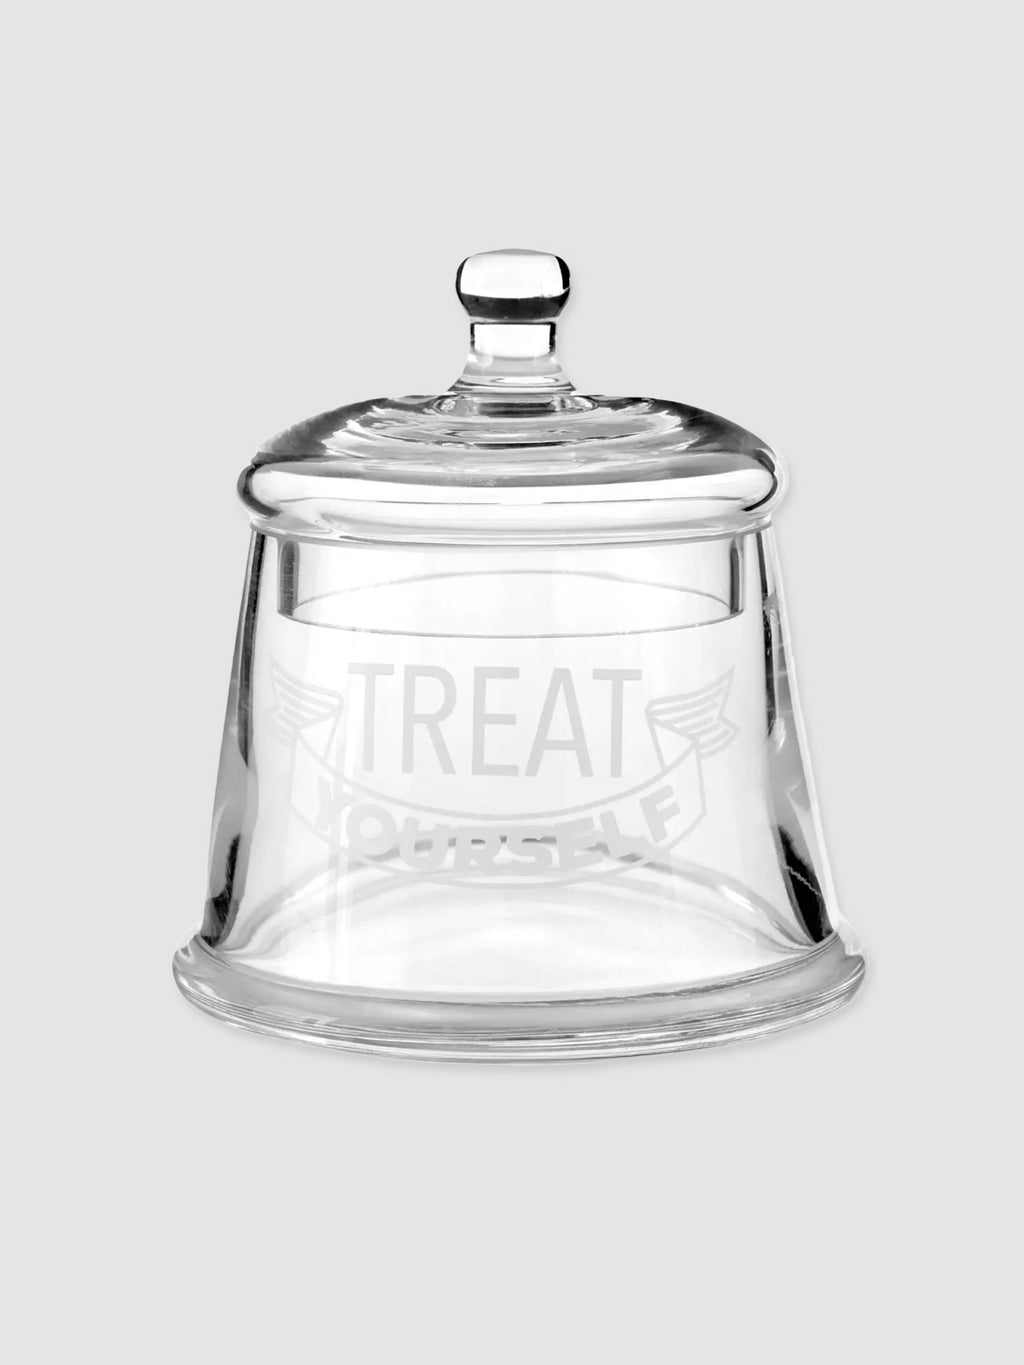 Treat Yourself Bell Shaped Glass Storage Jar